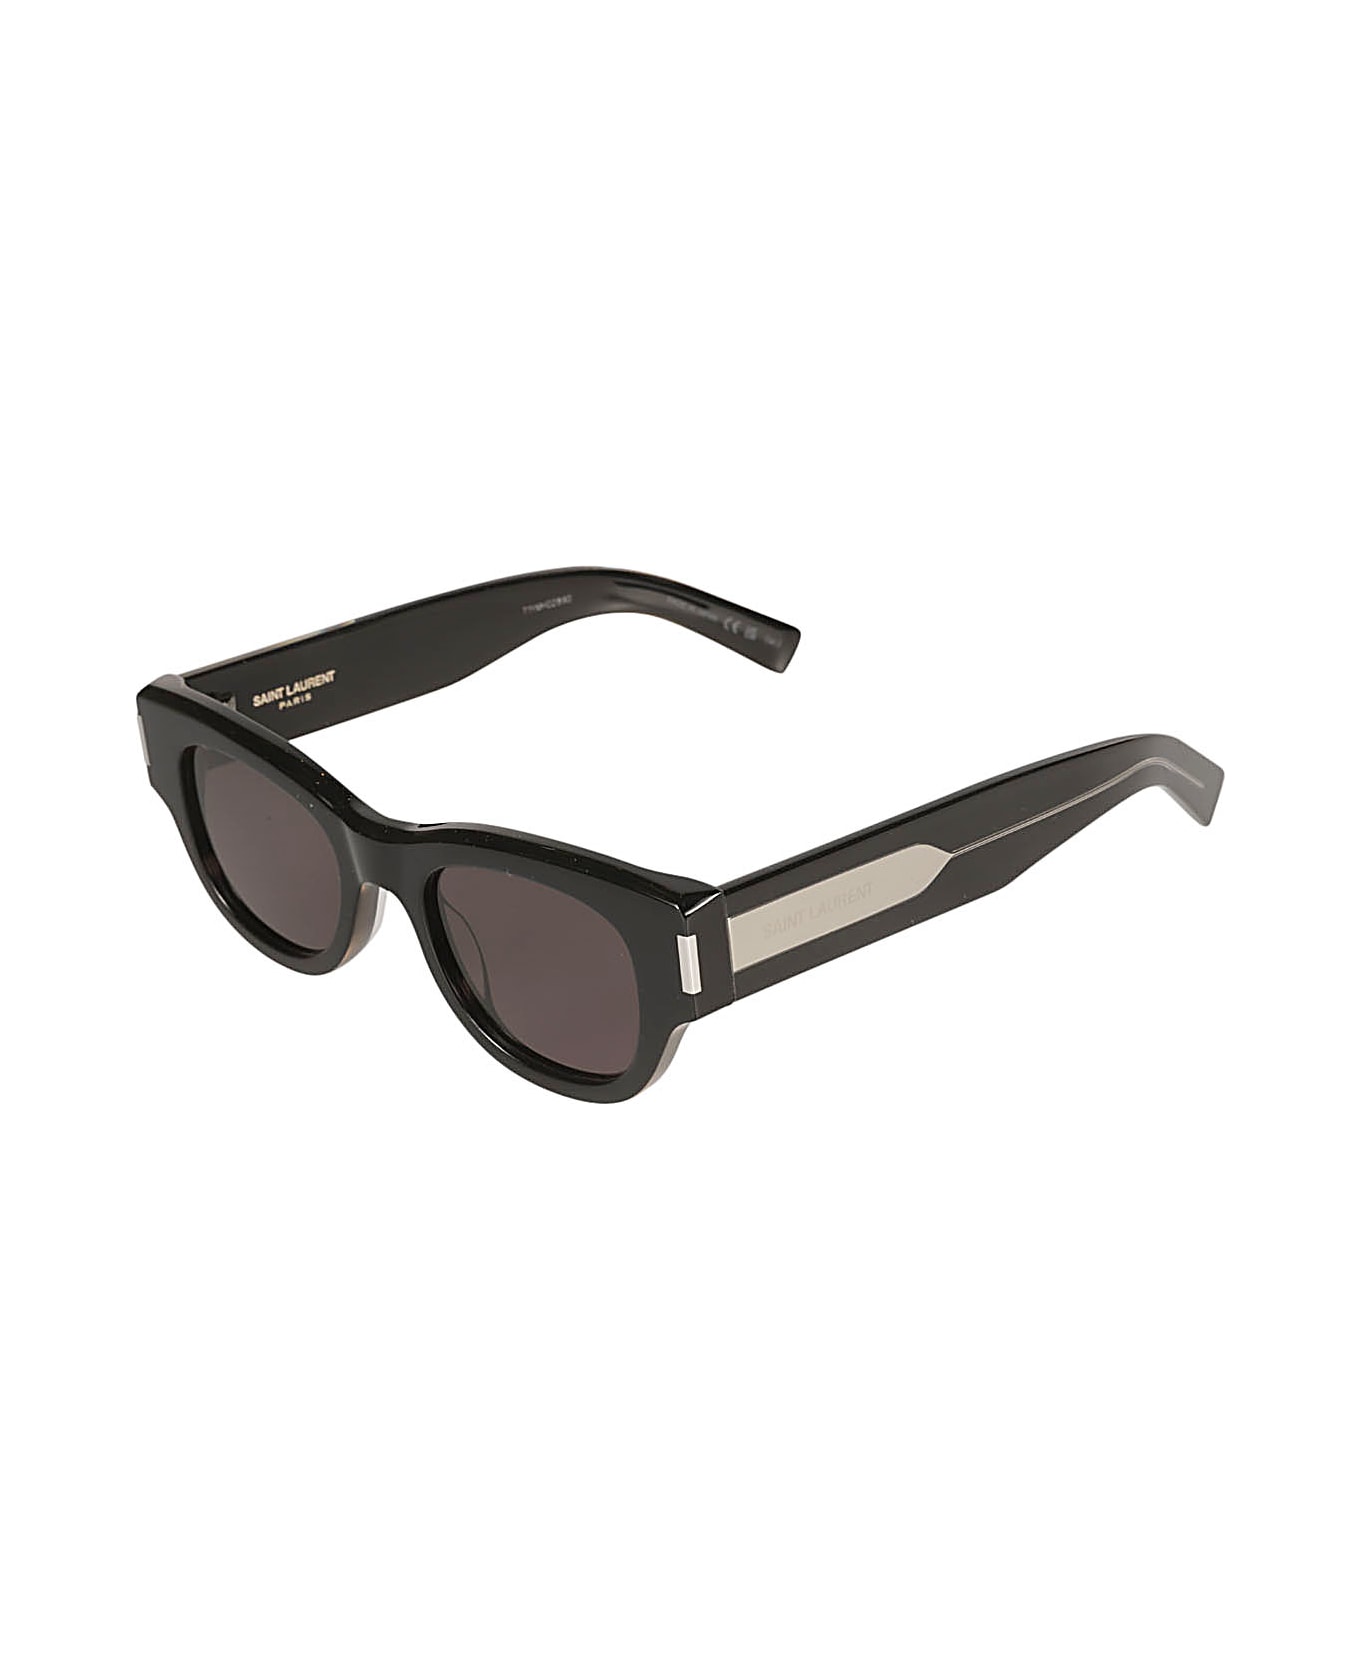 Saint Laurent Eyewear Round Frame Sunglasses Alican - Black/Crystal/Grey